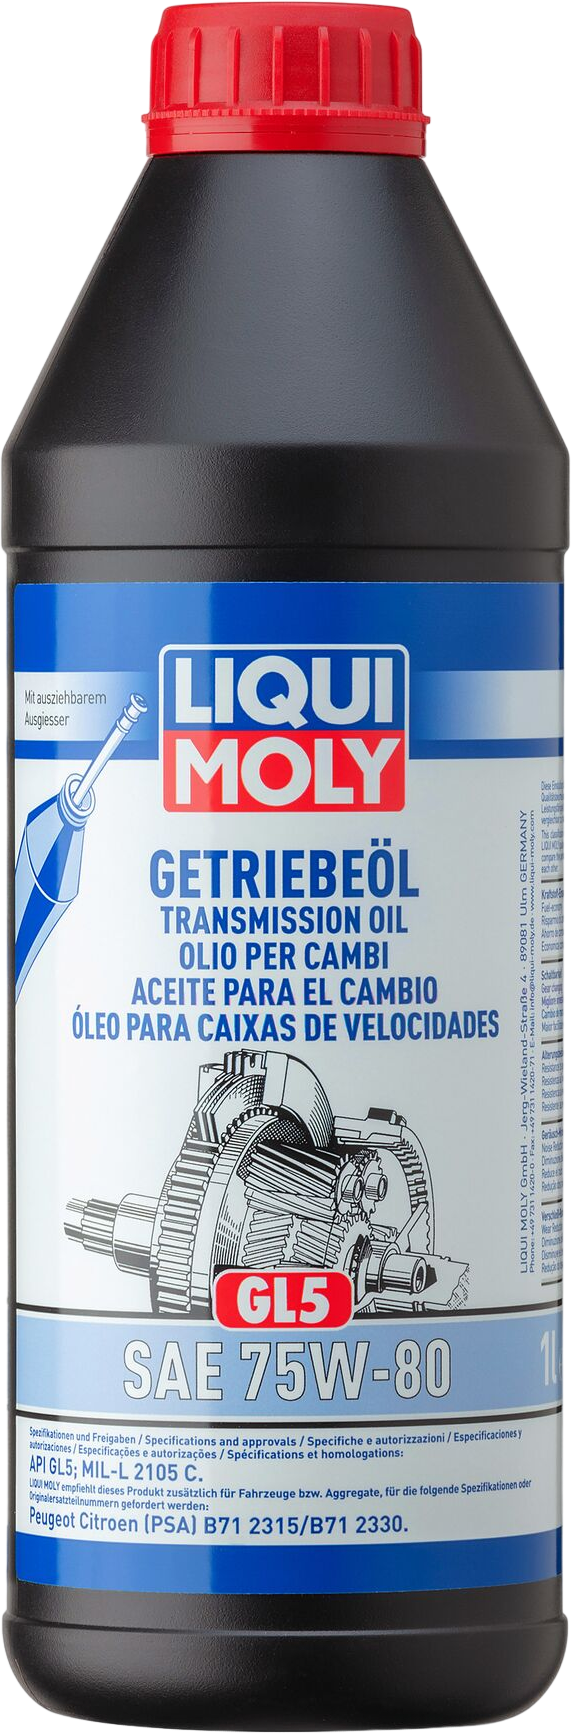 Liqui Moly Transmissieolie (GL5) 75W-80, 6 x 1 lt detail 2